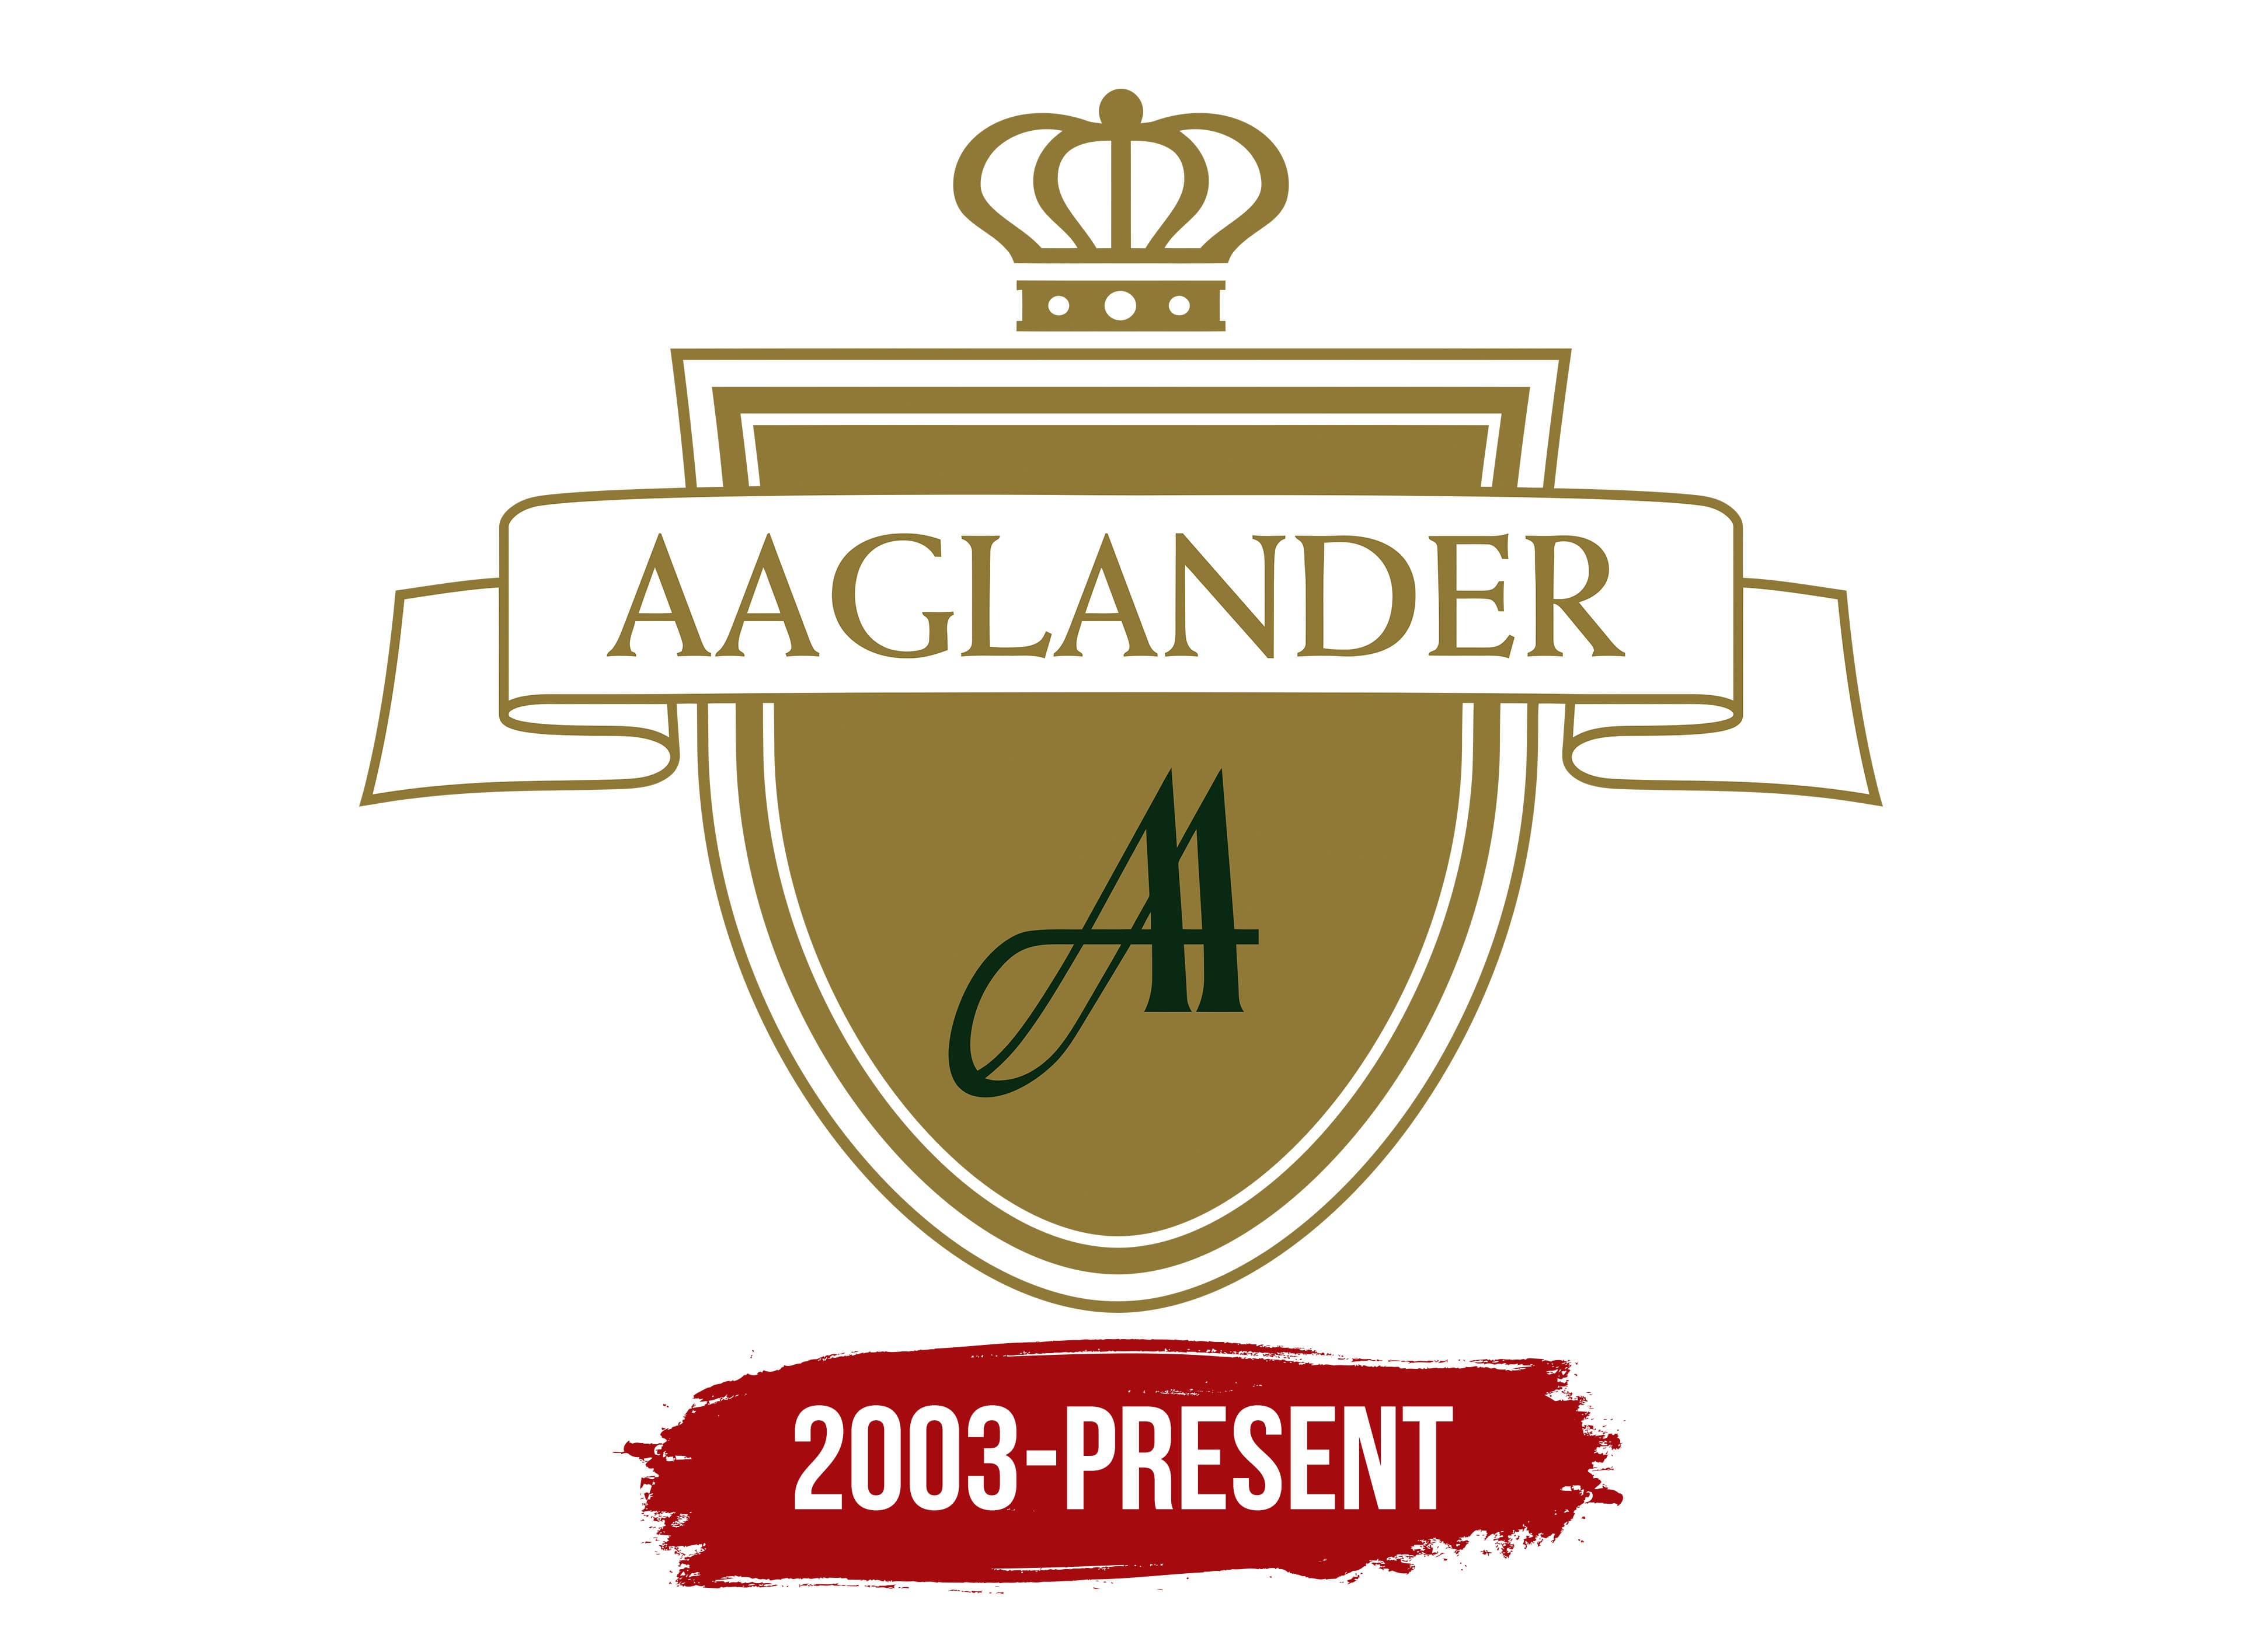 Aaglander Logo, symbol, meaning, history, PNG, brand